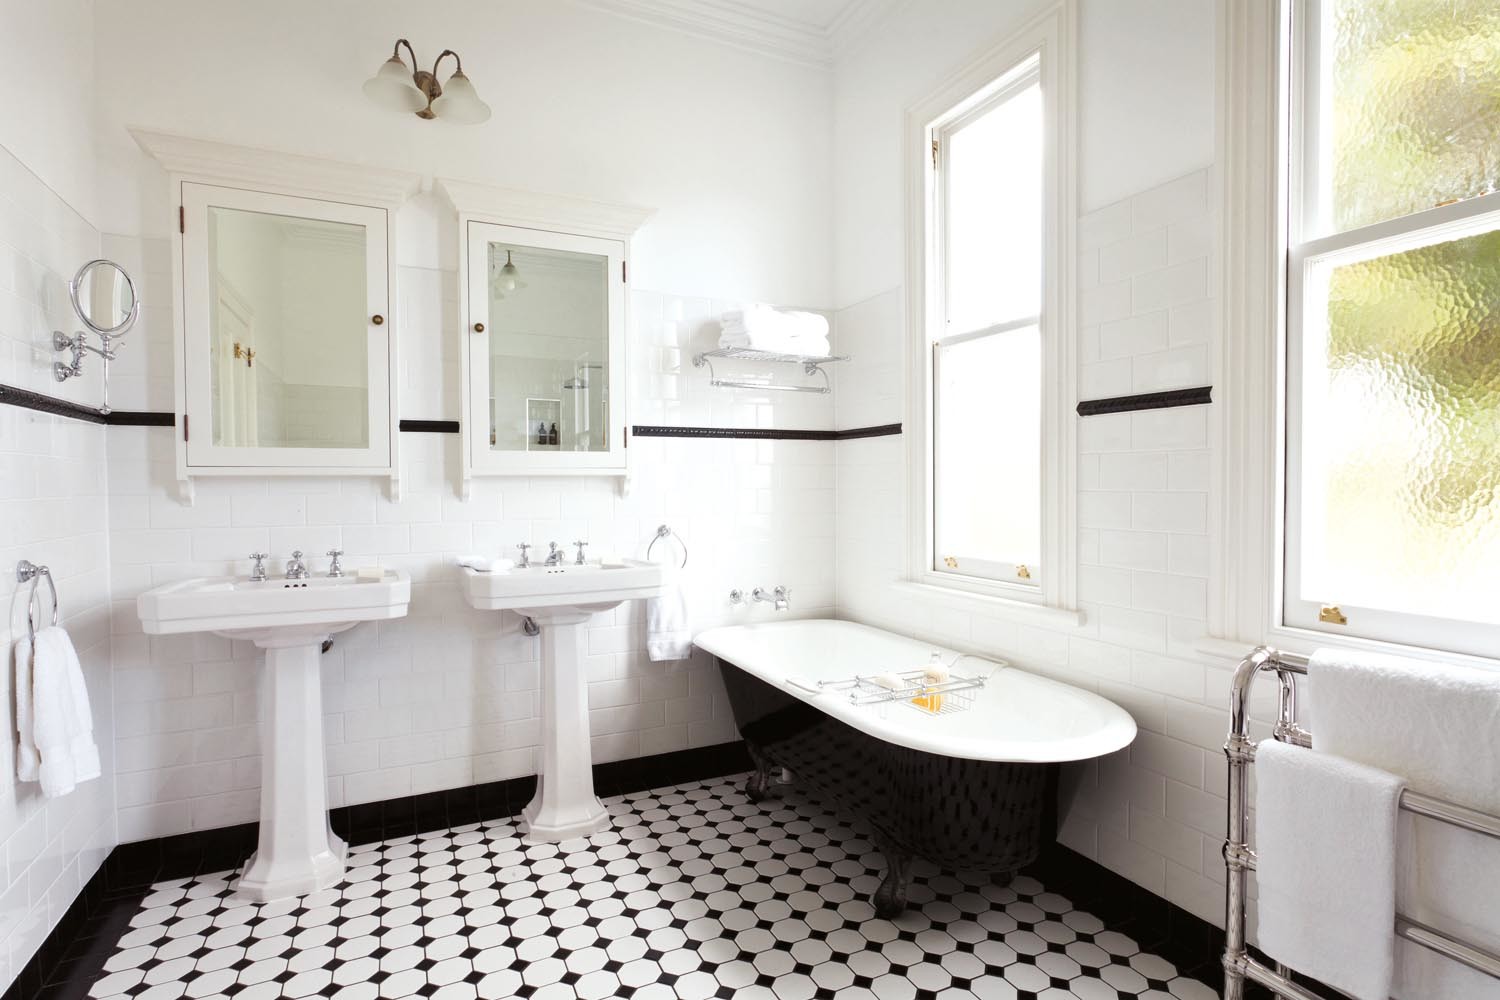 1920s Style Bathrooms That Inspire Rue, Black 038 White Tile Designs Bathrooms